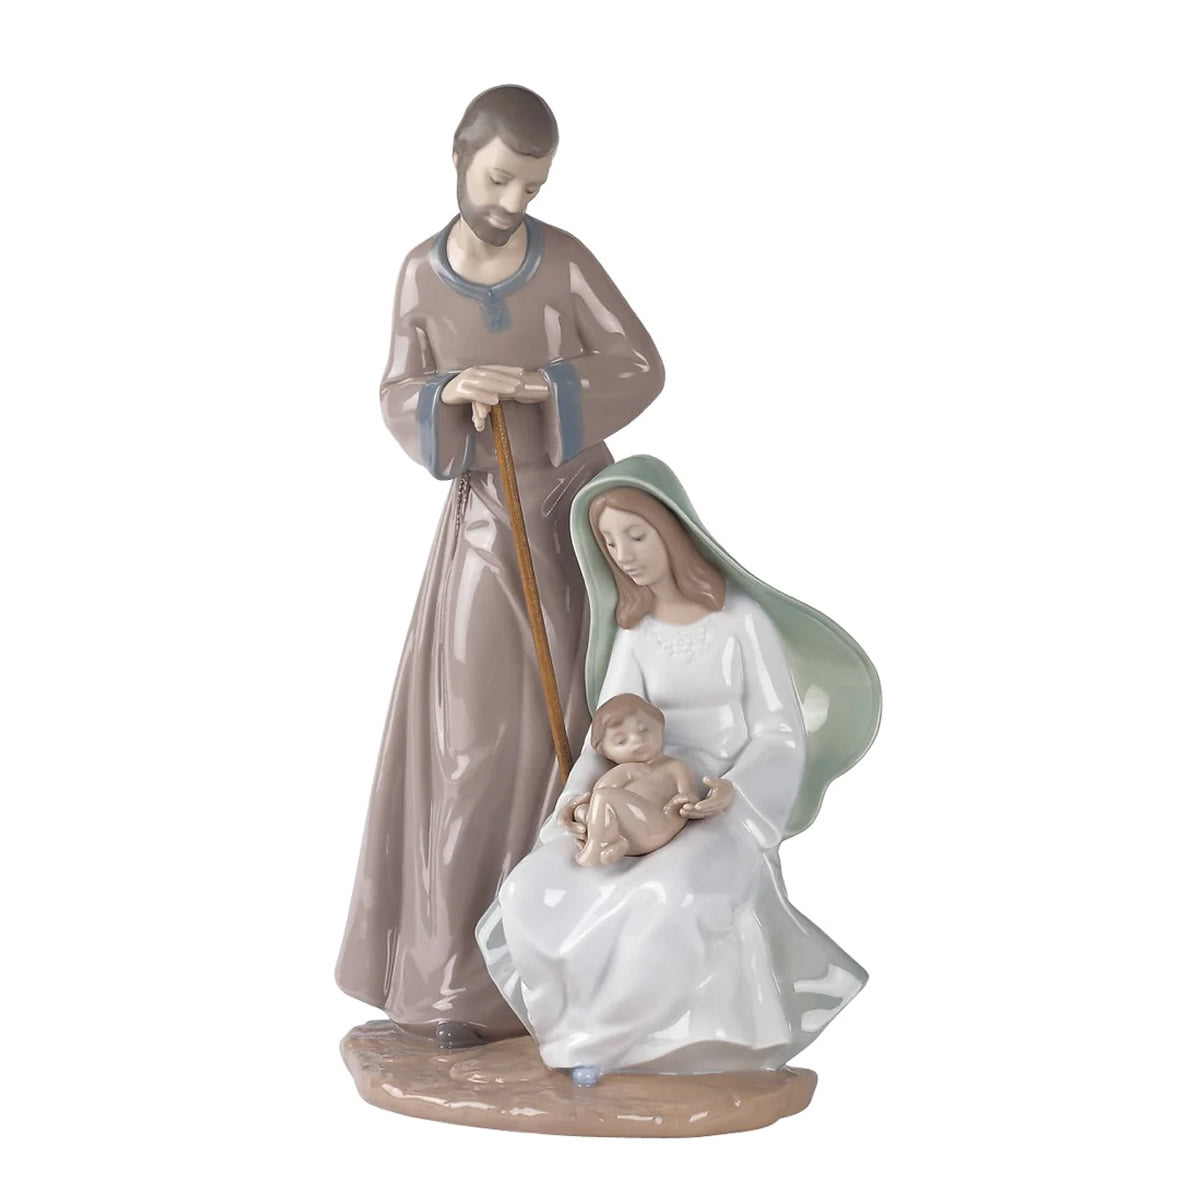 The Holy Family Porcelain Figurine by NAO